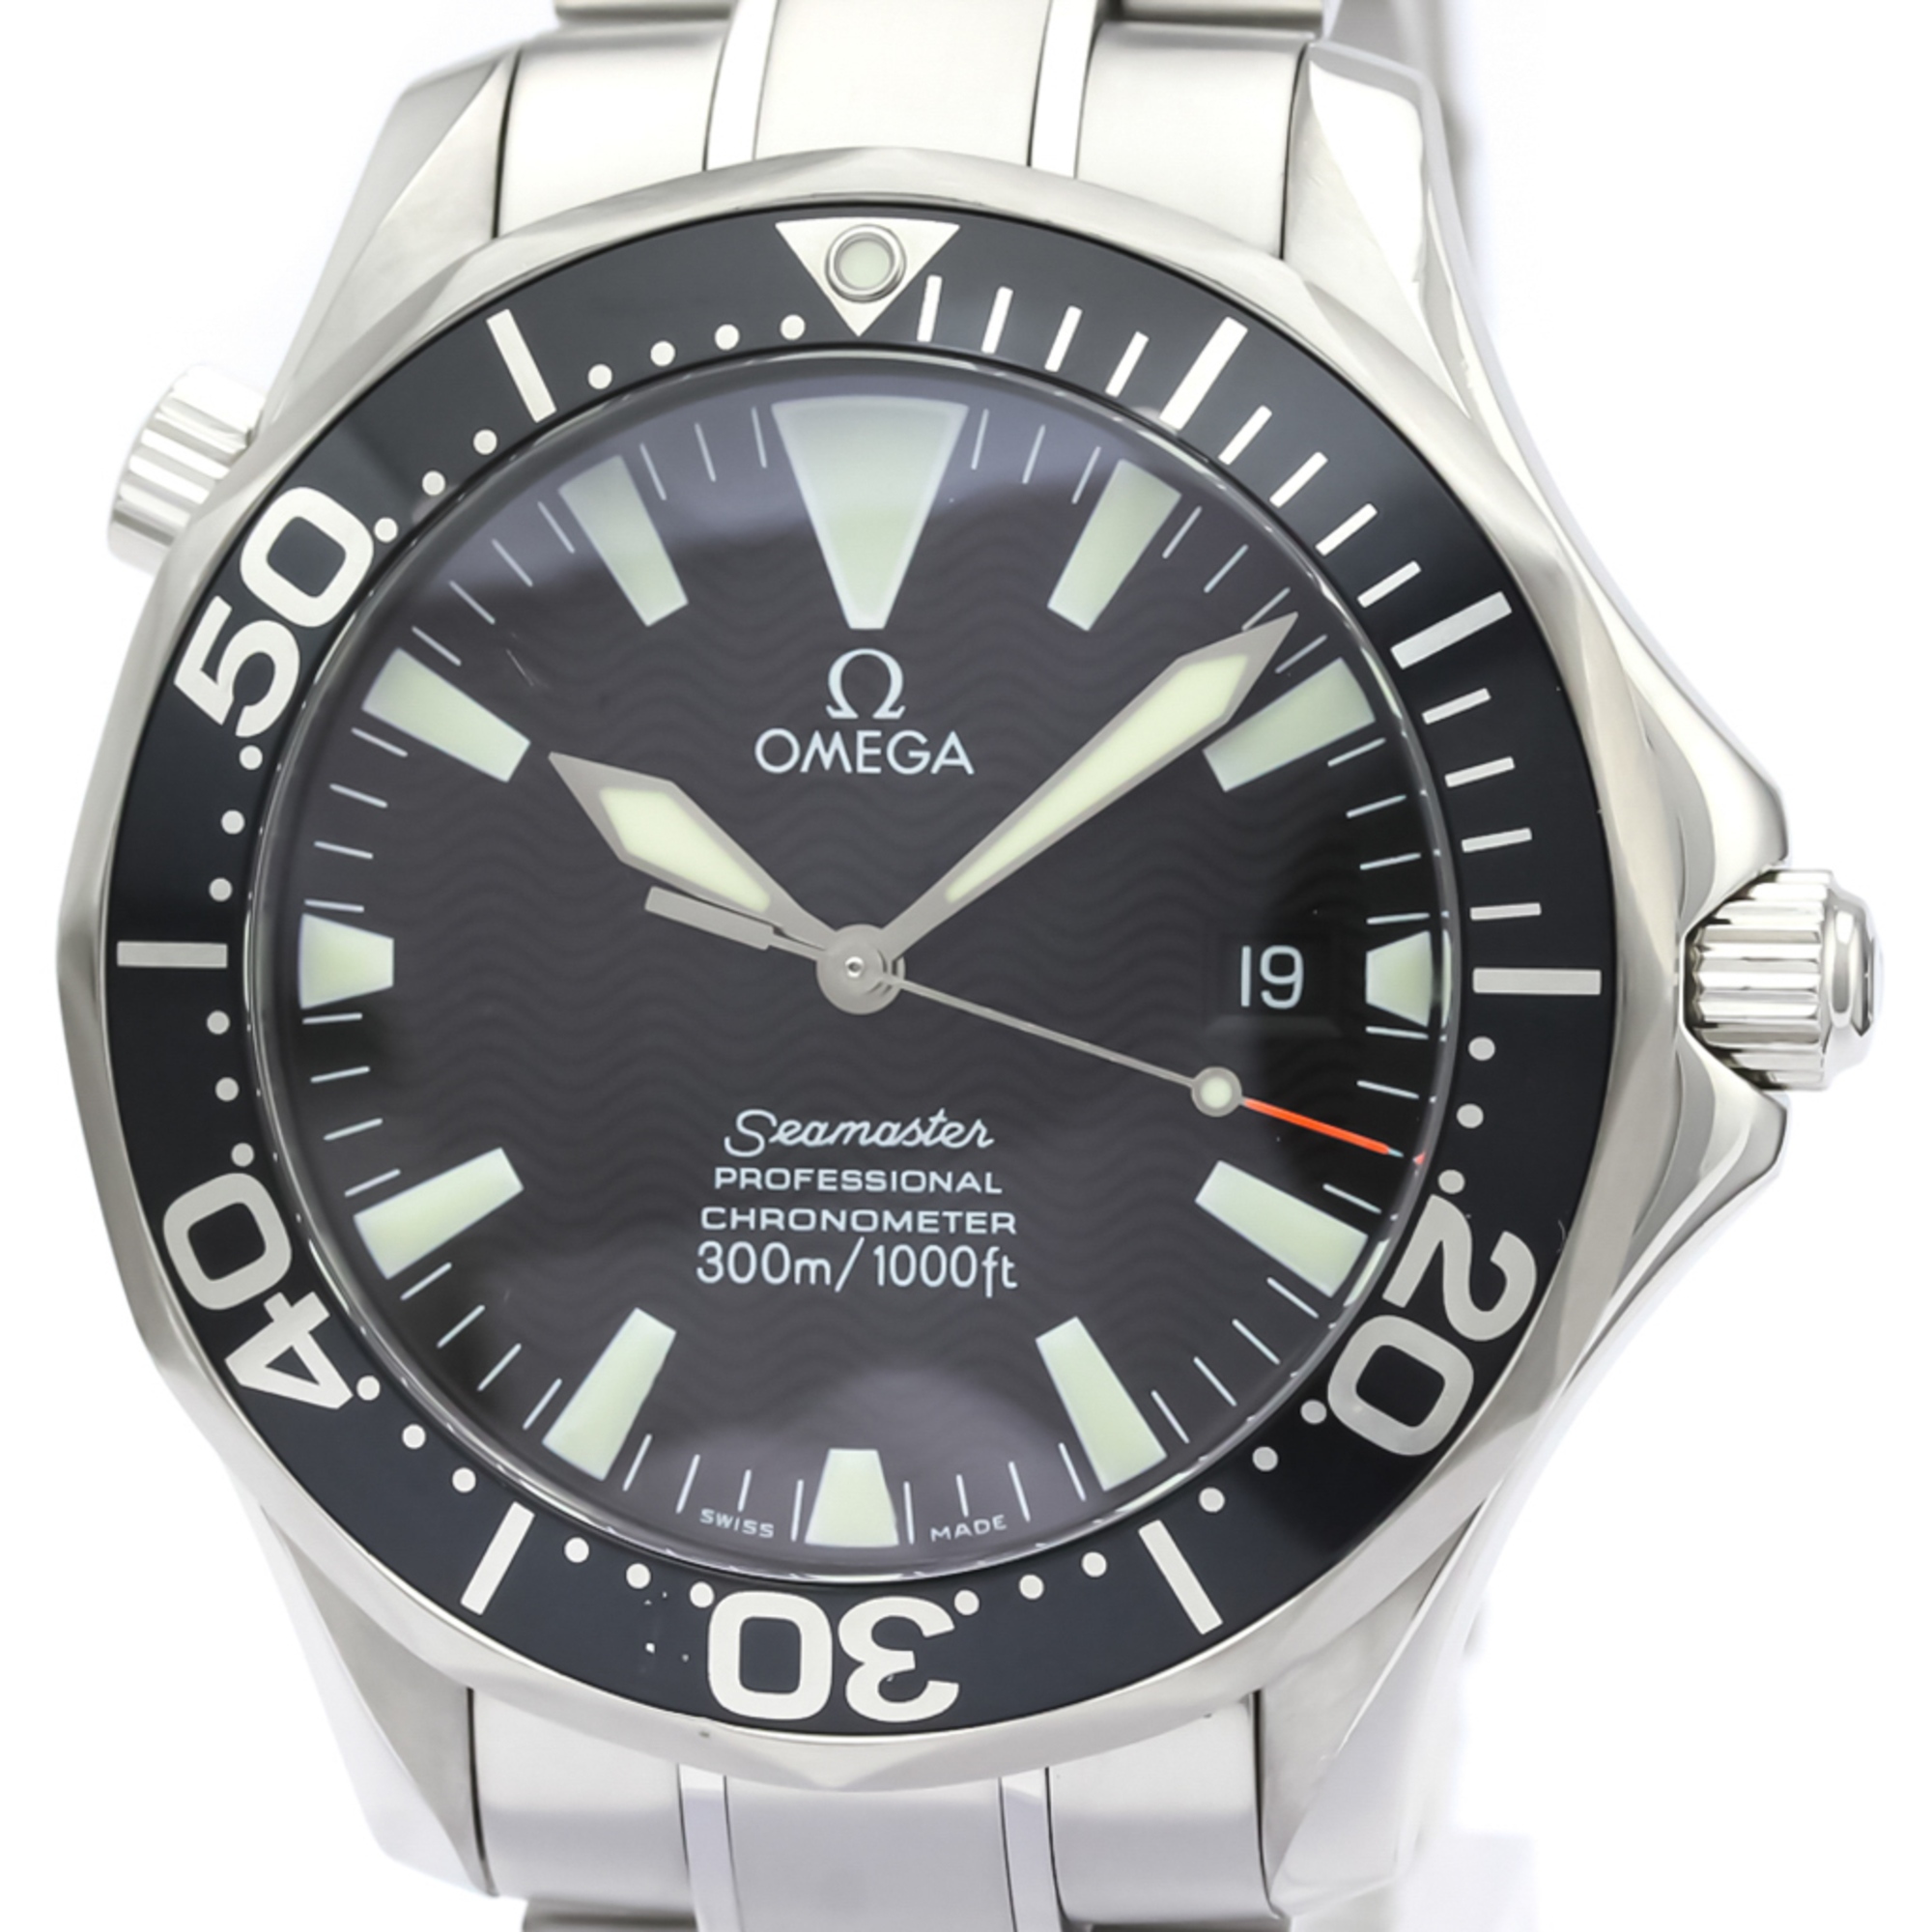 OMEGA Seamaster Professional 300M Automatic Mens Watch 2254.50